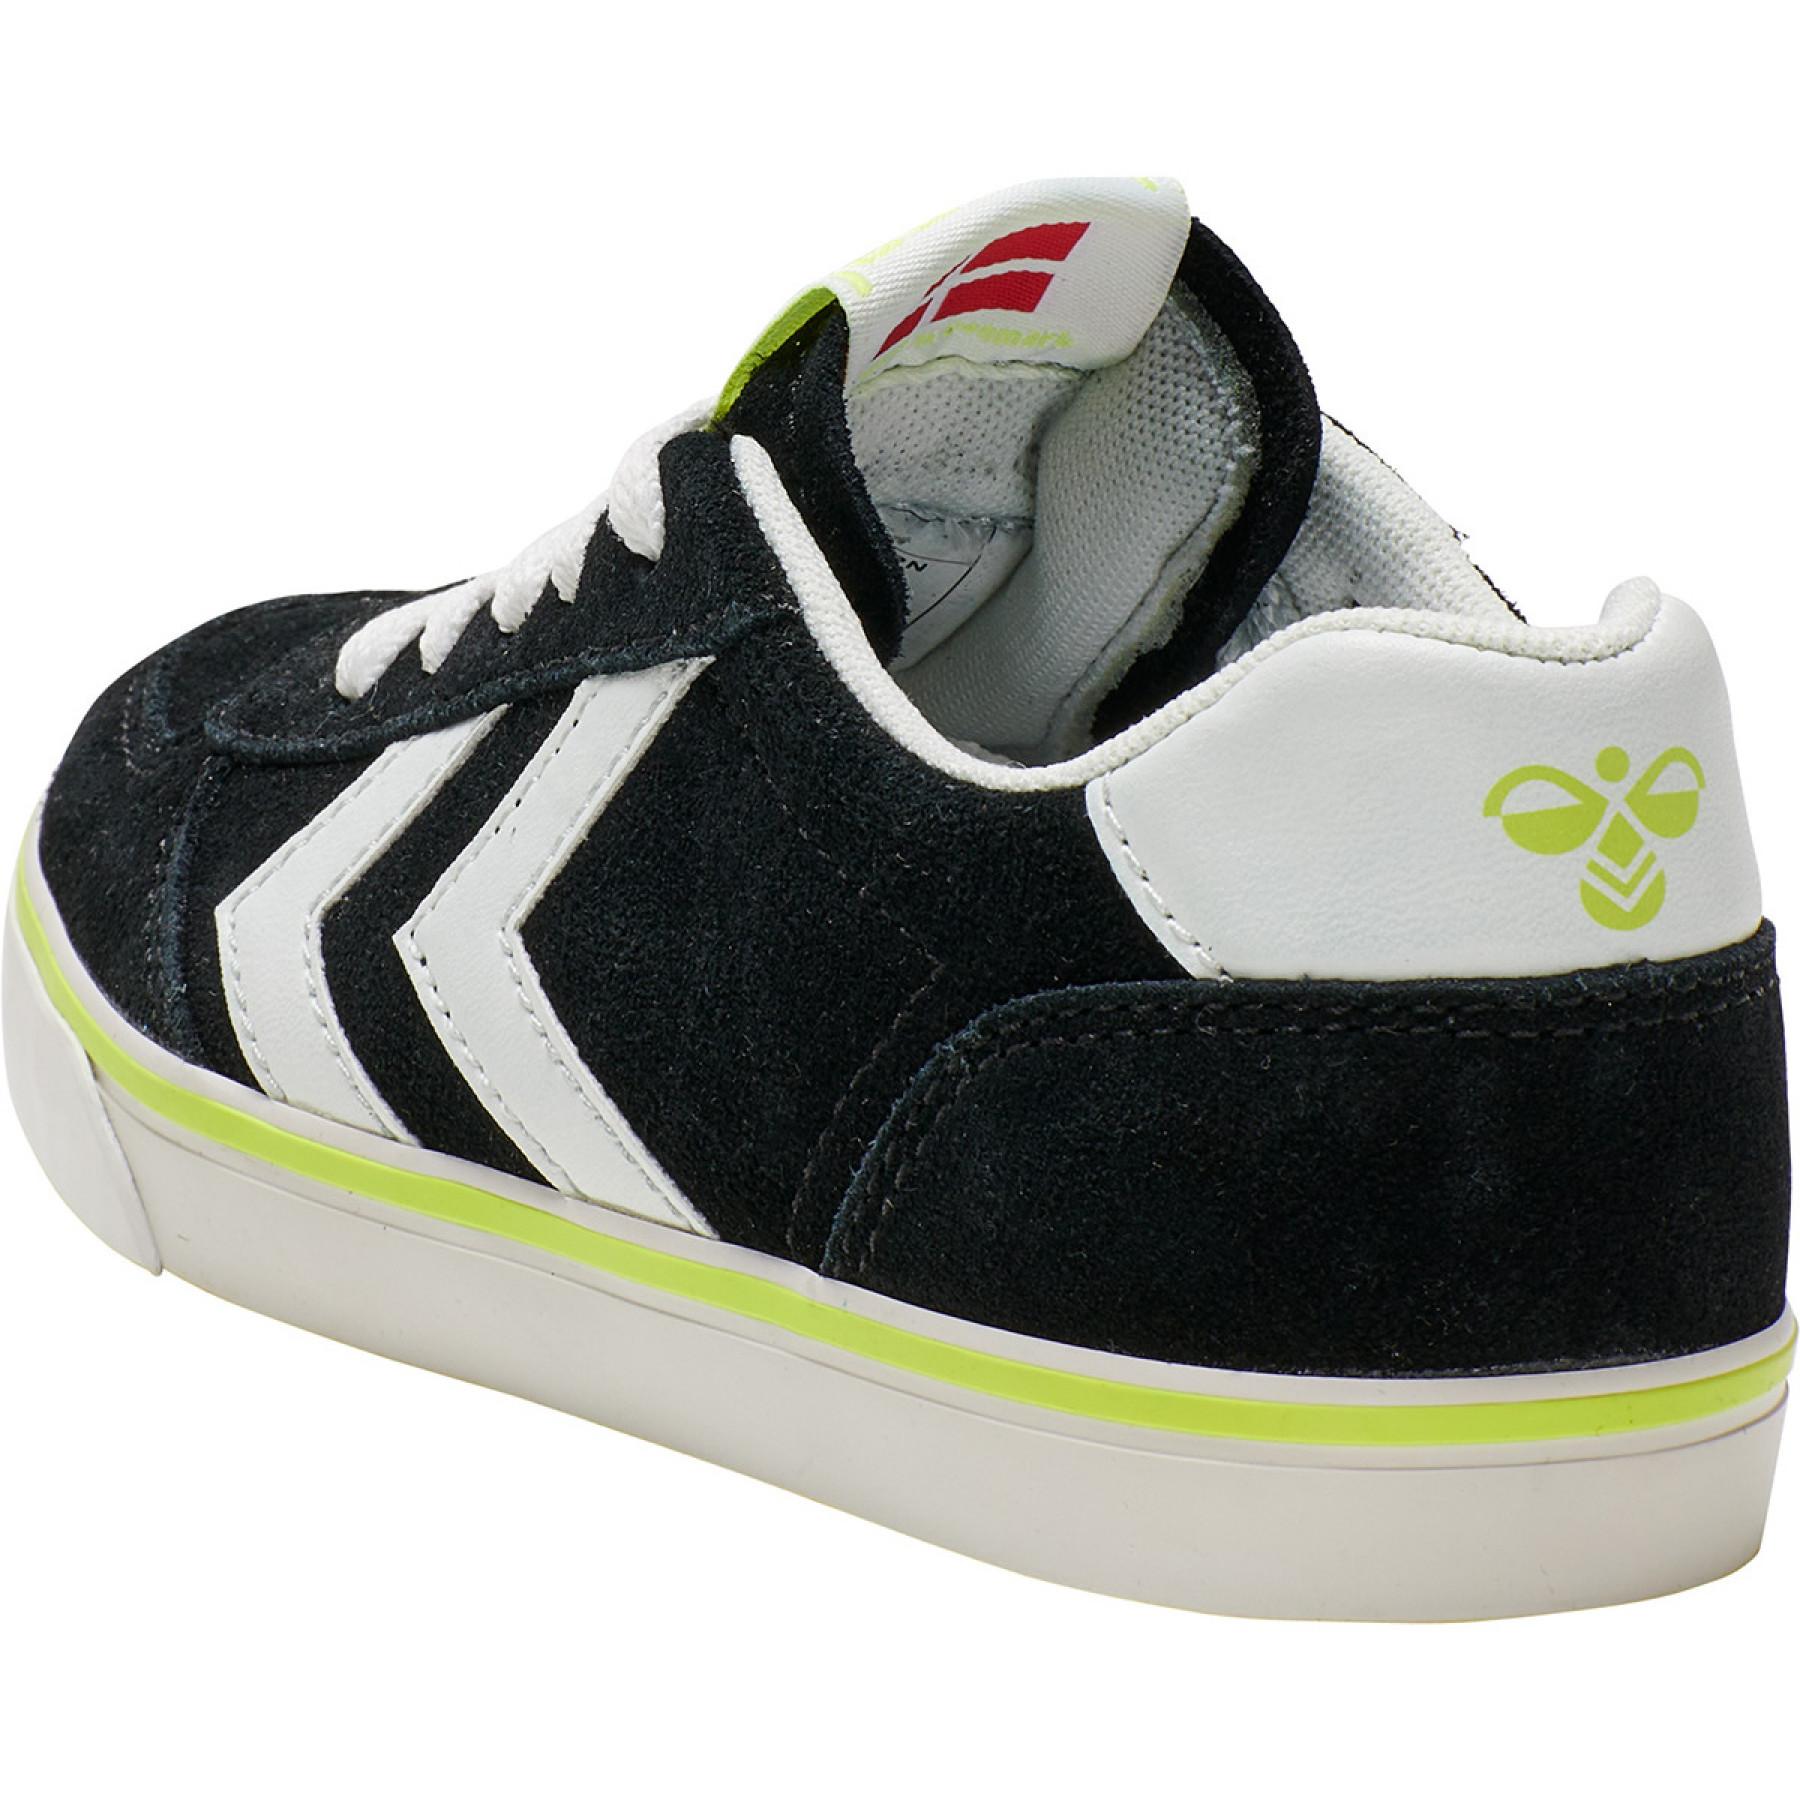 Children's sneakers Hummel stadil 3.0